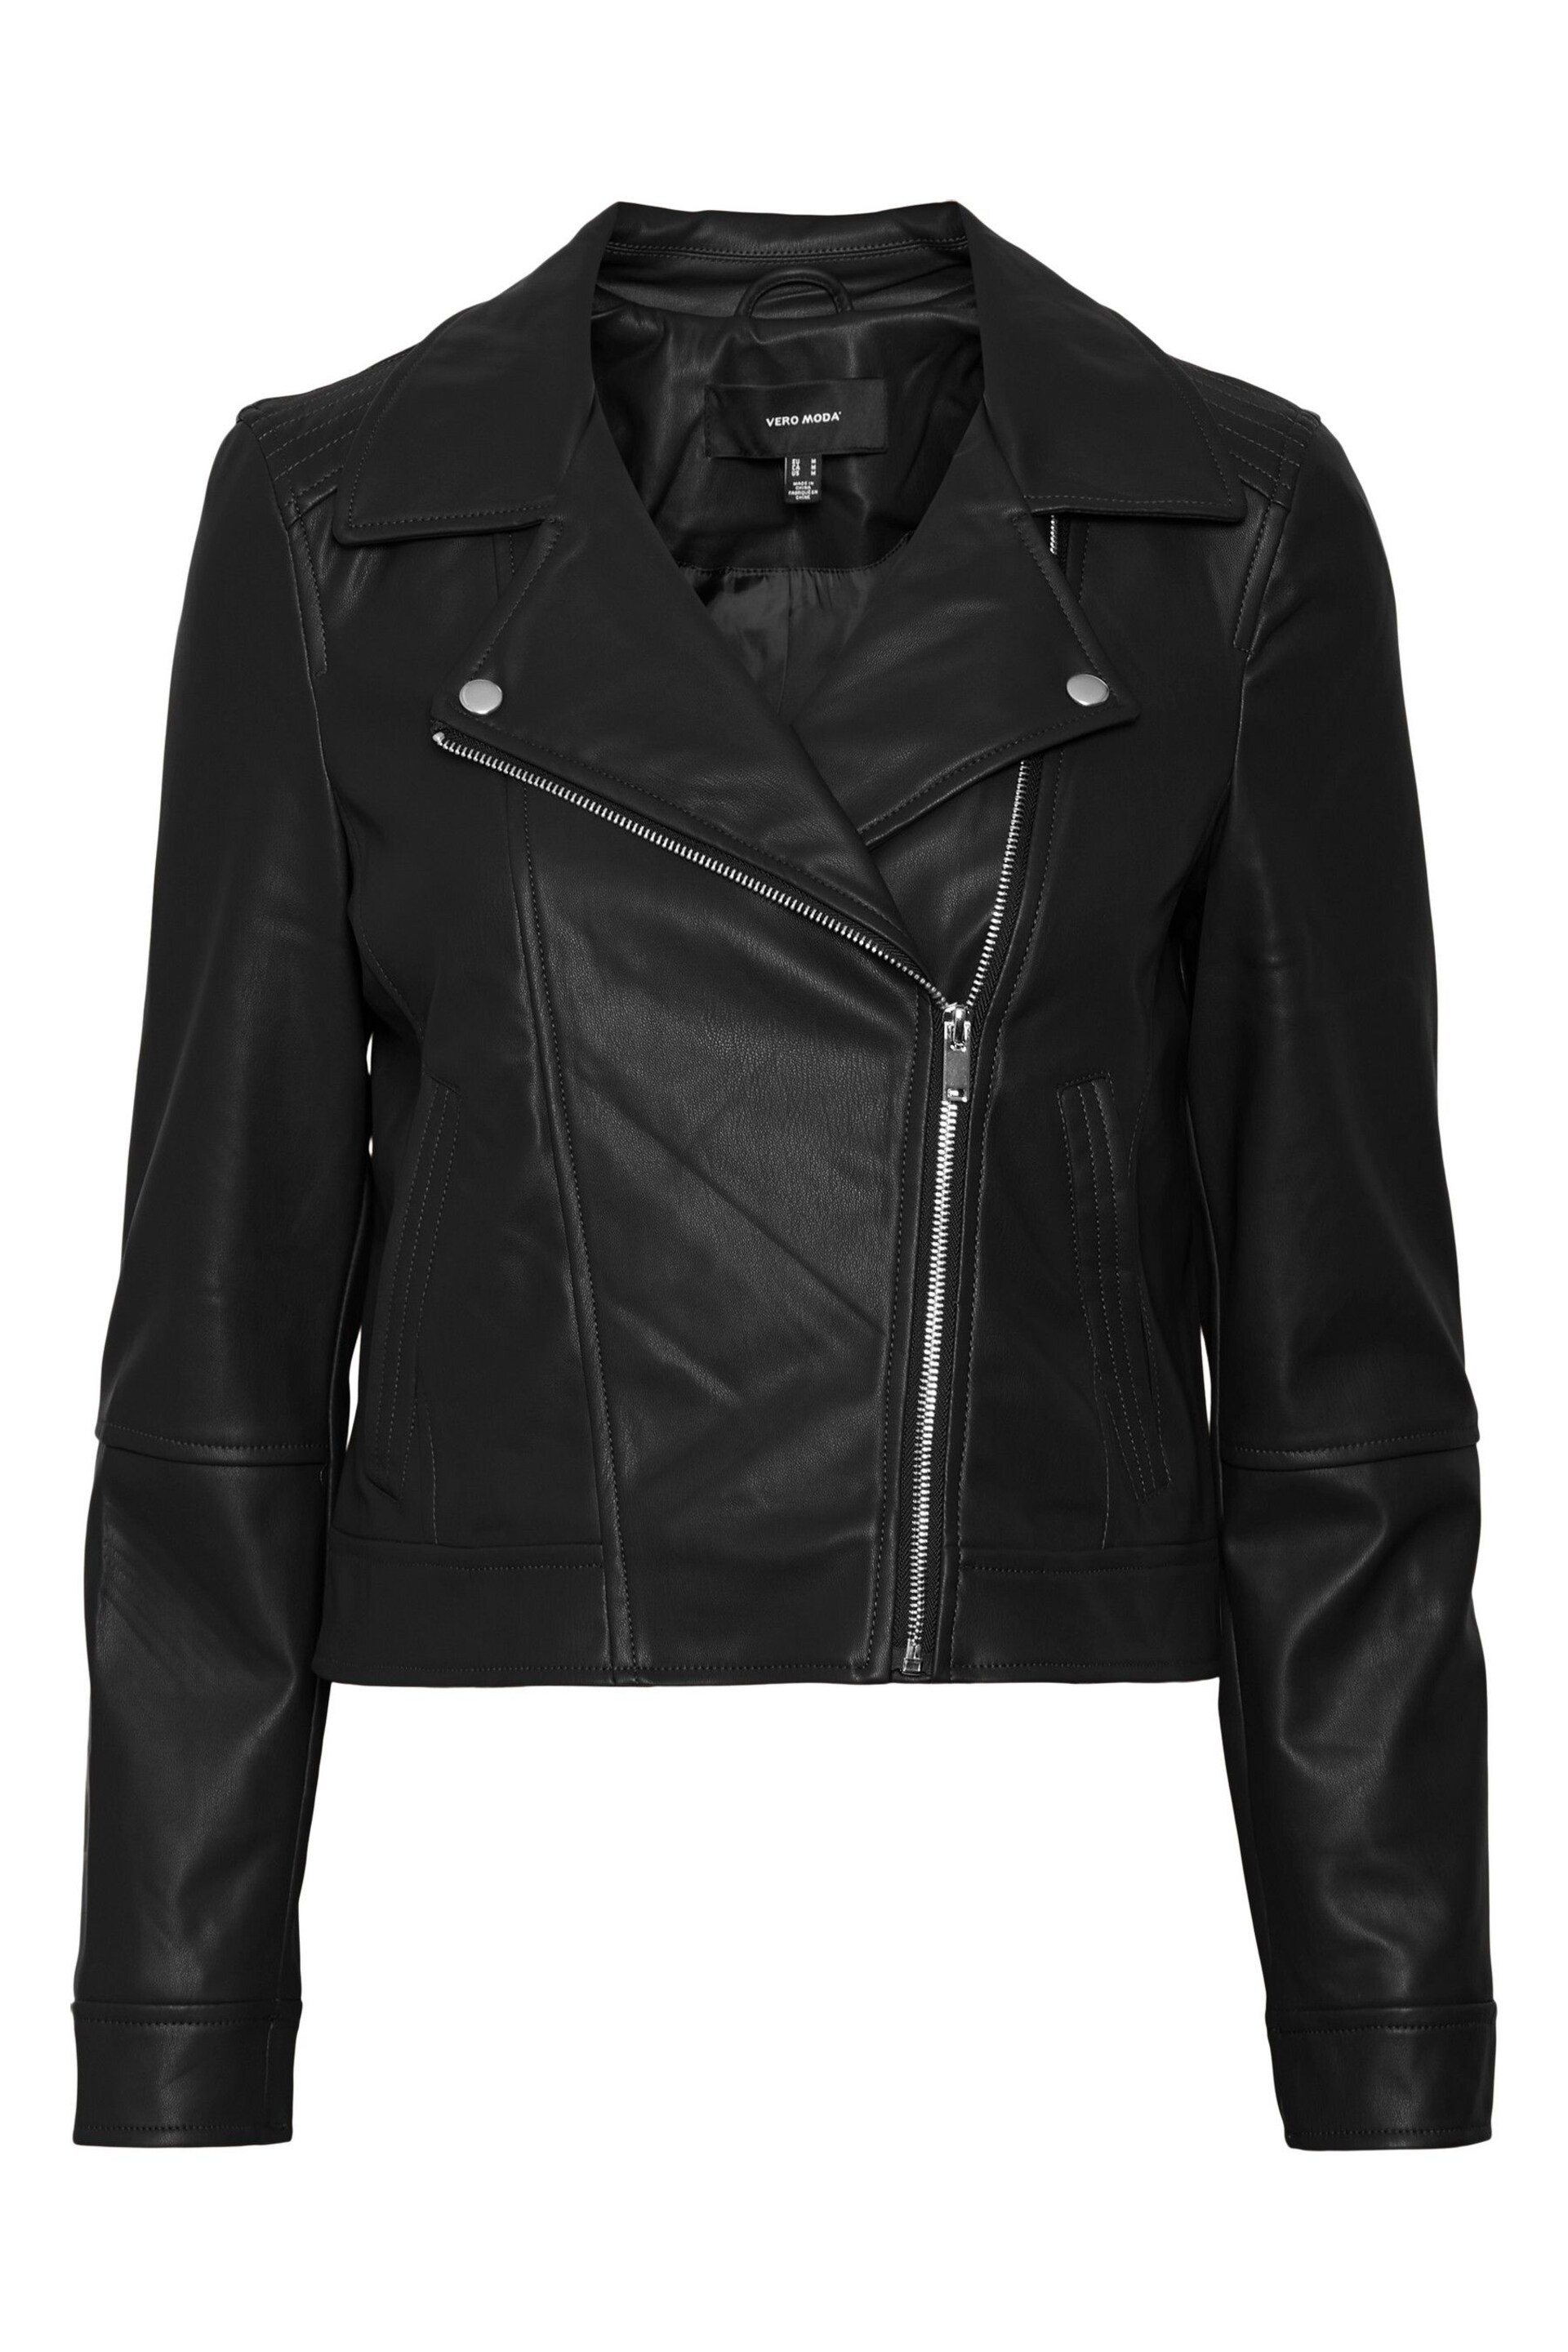 VERO MODA Black Cropped Faux Leather Biker Jacket - Image 5 of 5